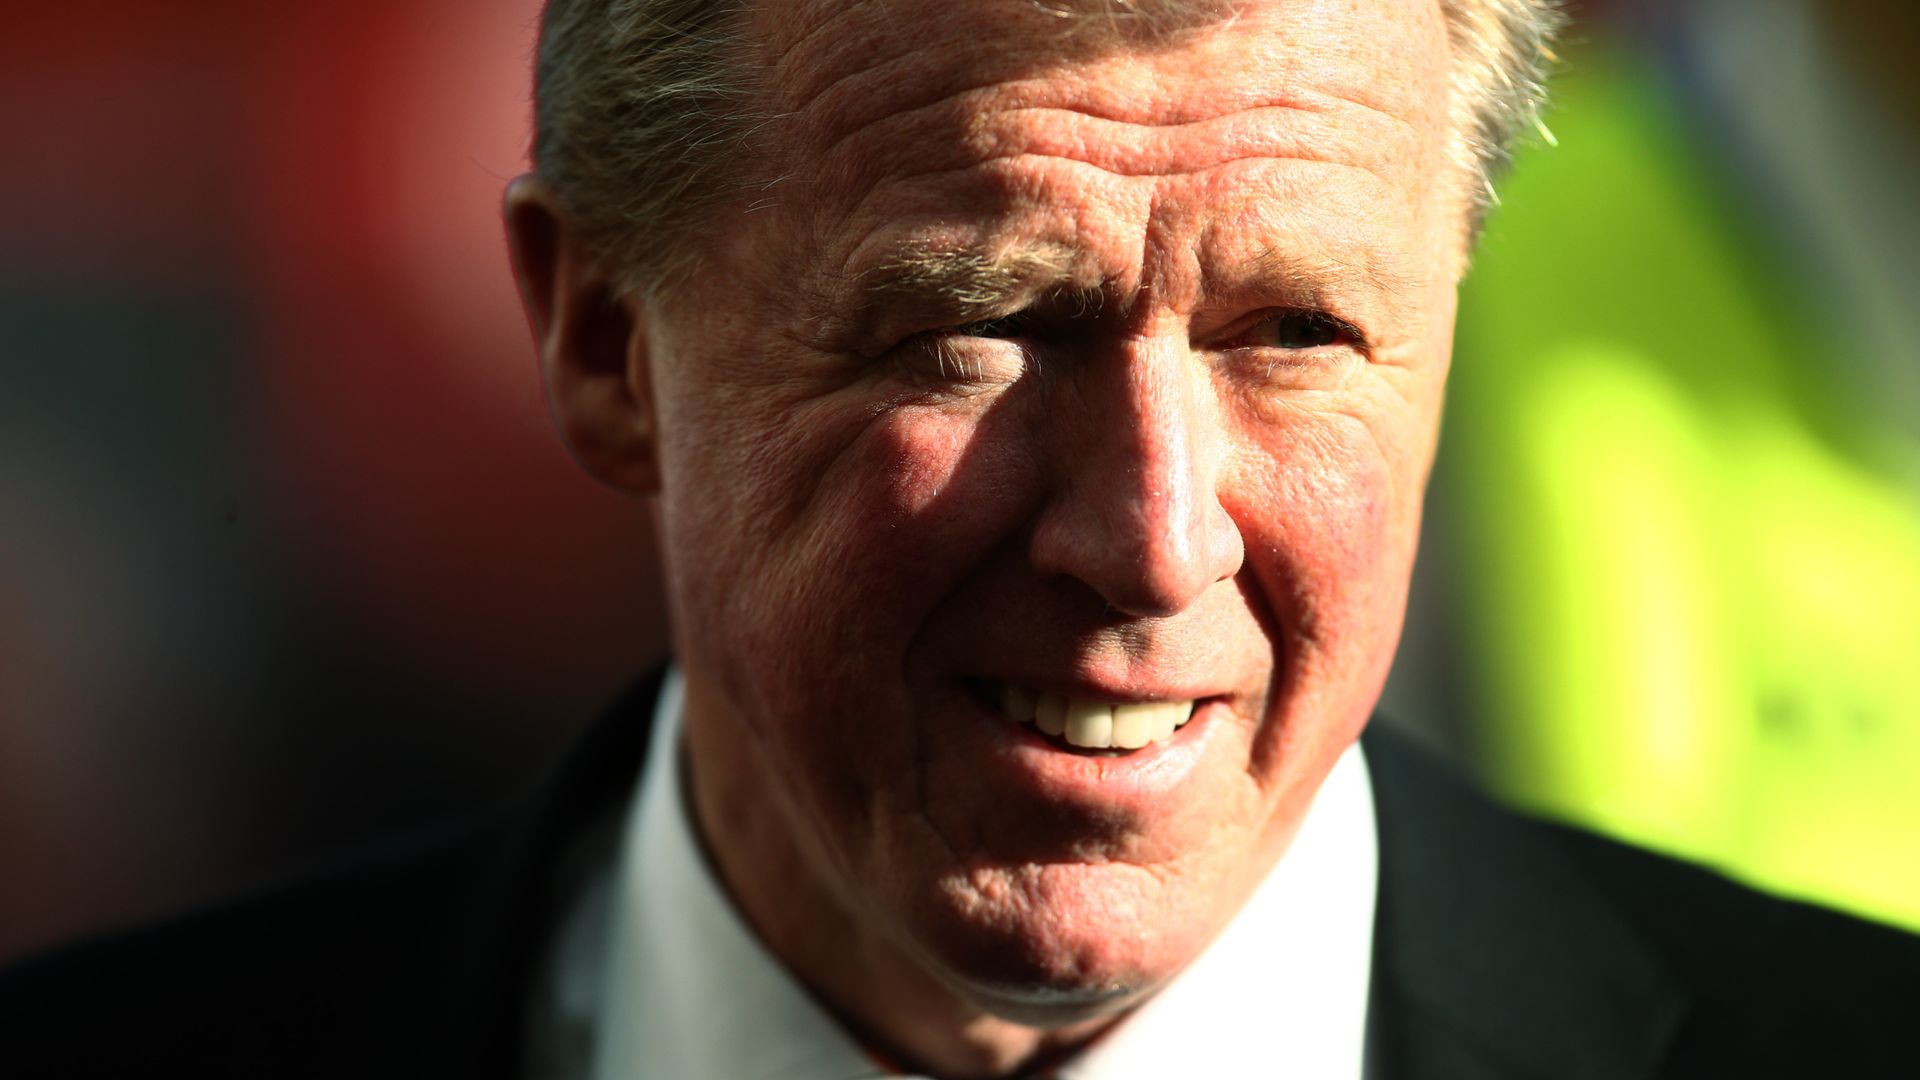 McClaren returns to Derby